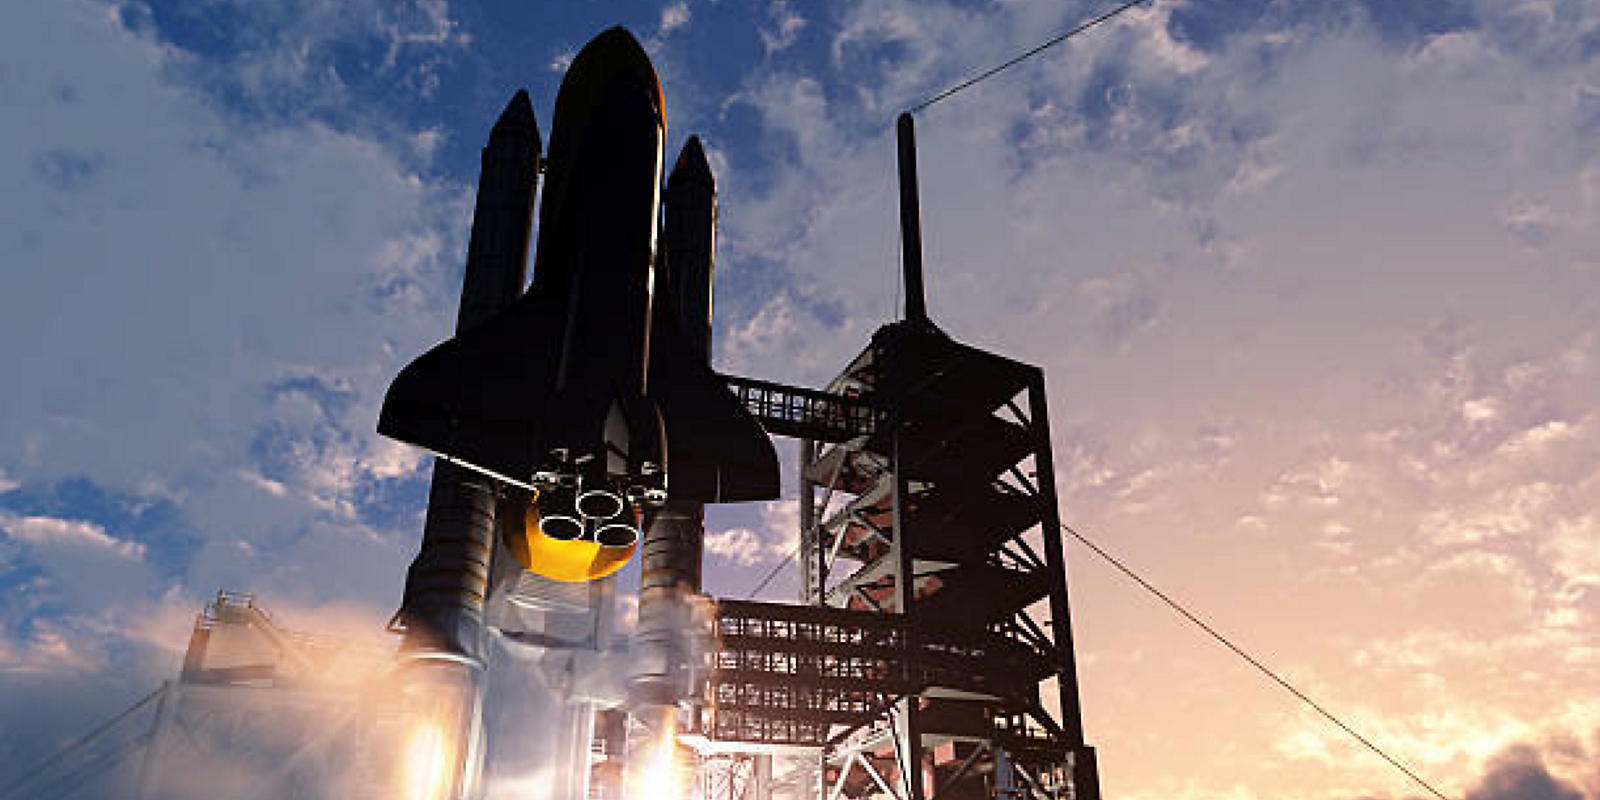 Florida Gulf Coast Space Shuttle Launch